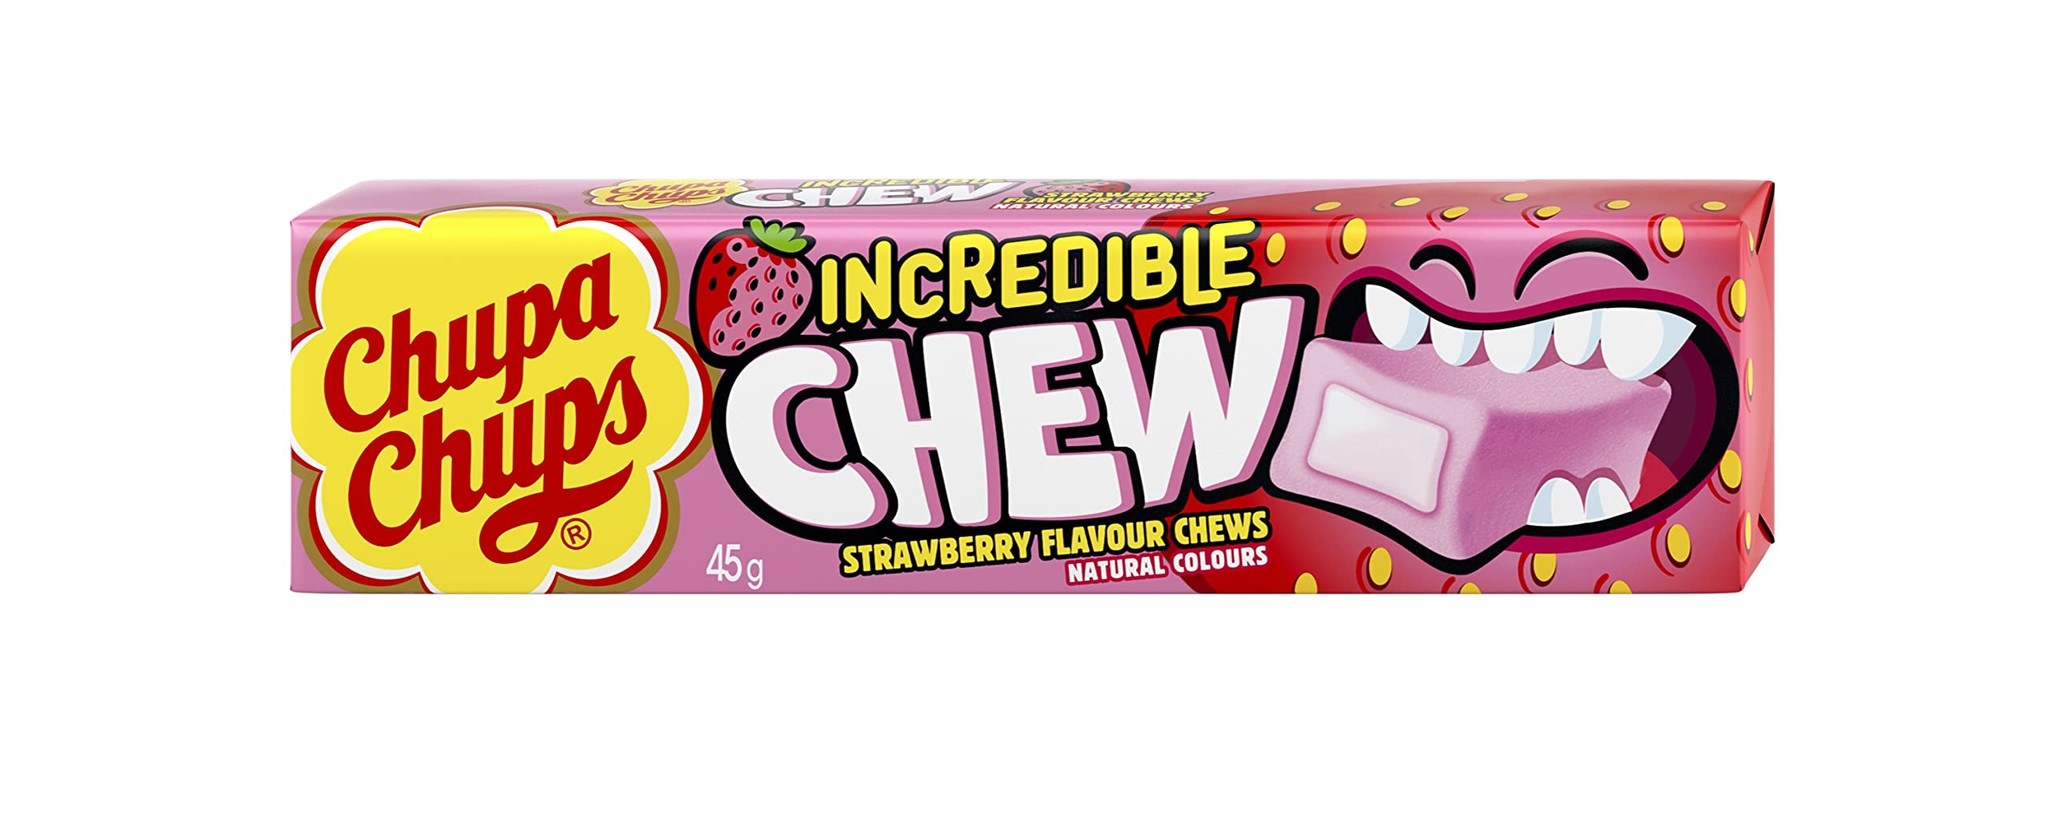 Chupa Chups Chupa Chups - Incredible Chew Strawberry 45 Gram